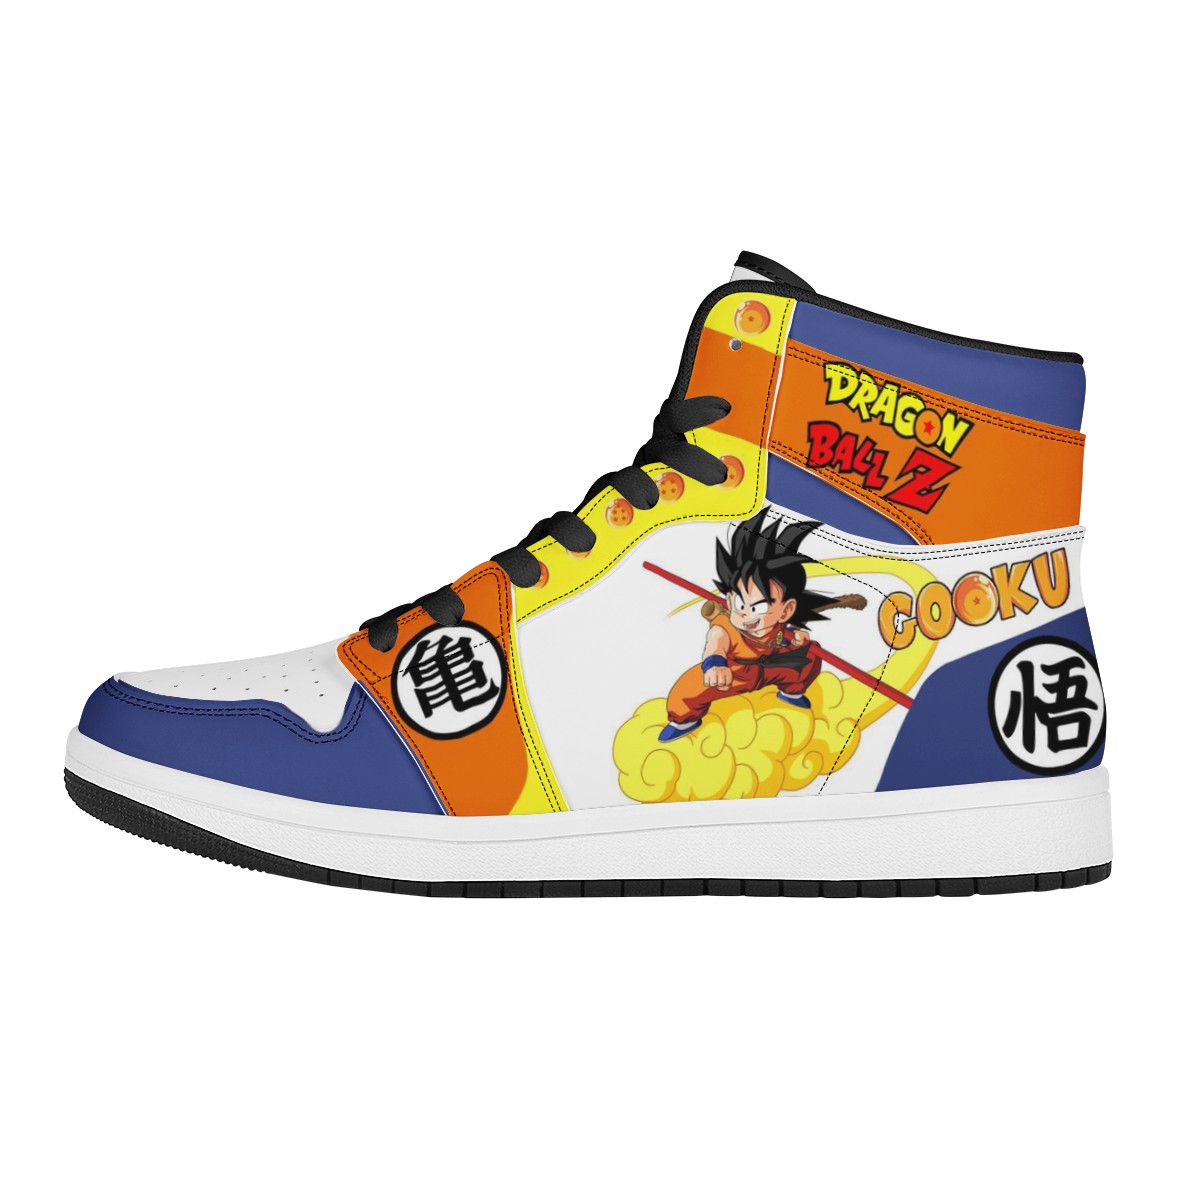 Goku Custom Nike Air Jordan 1 Leather Sneaker